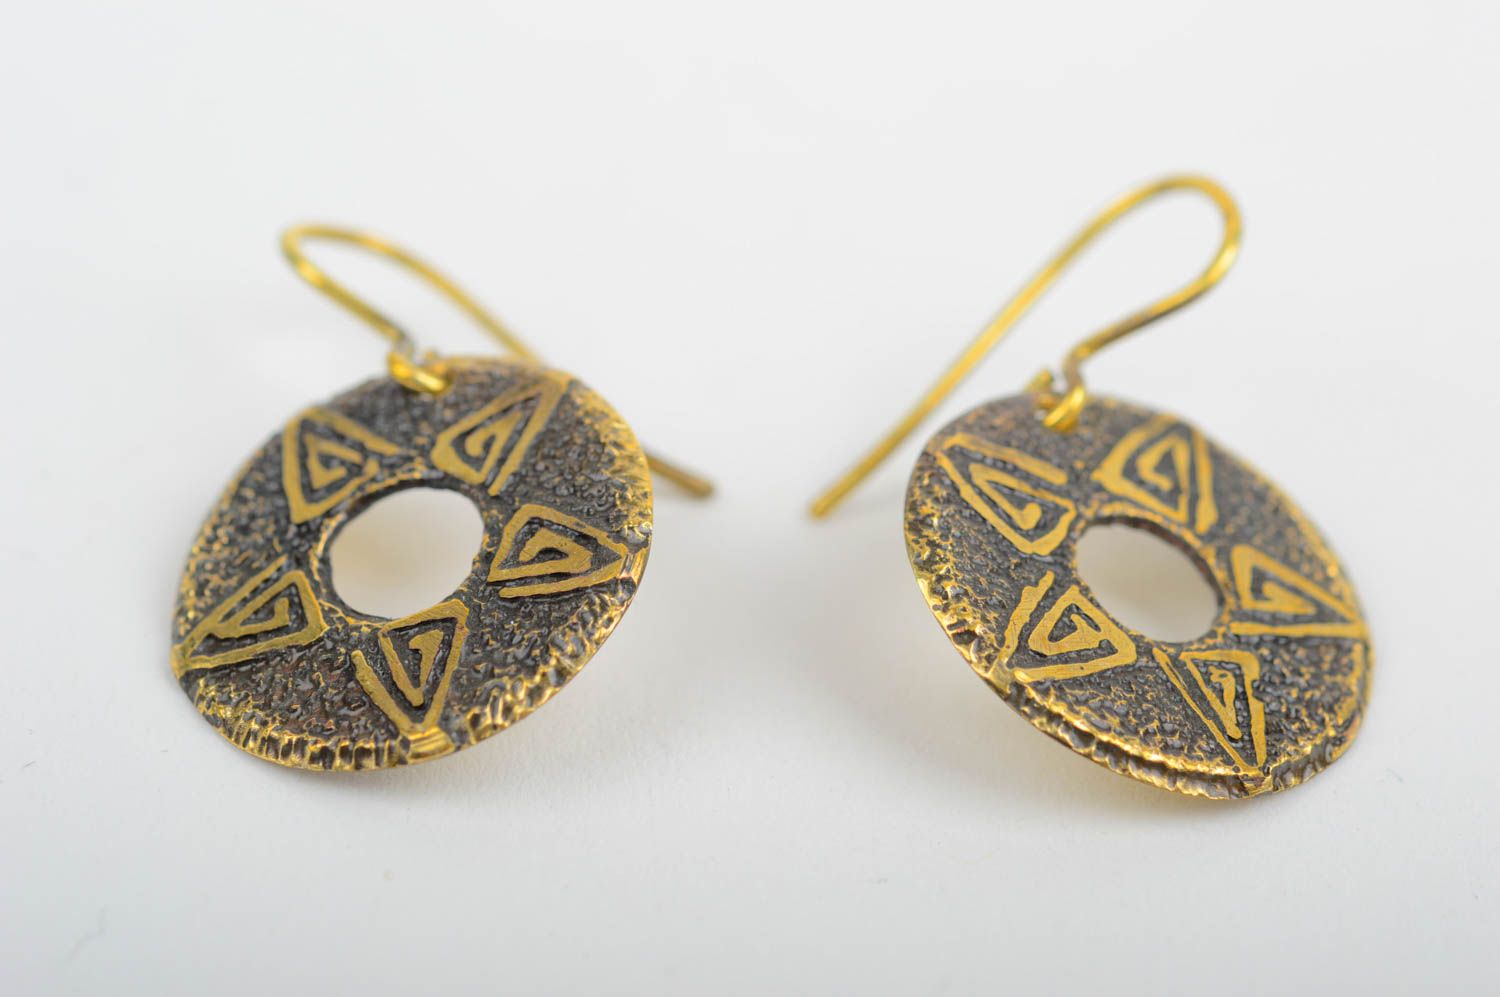 Handmade metal earrings unusual cute earrings fashion trends gifts for her photo 3